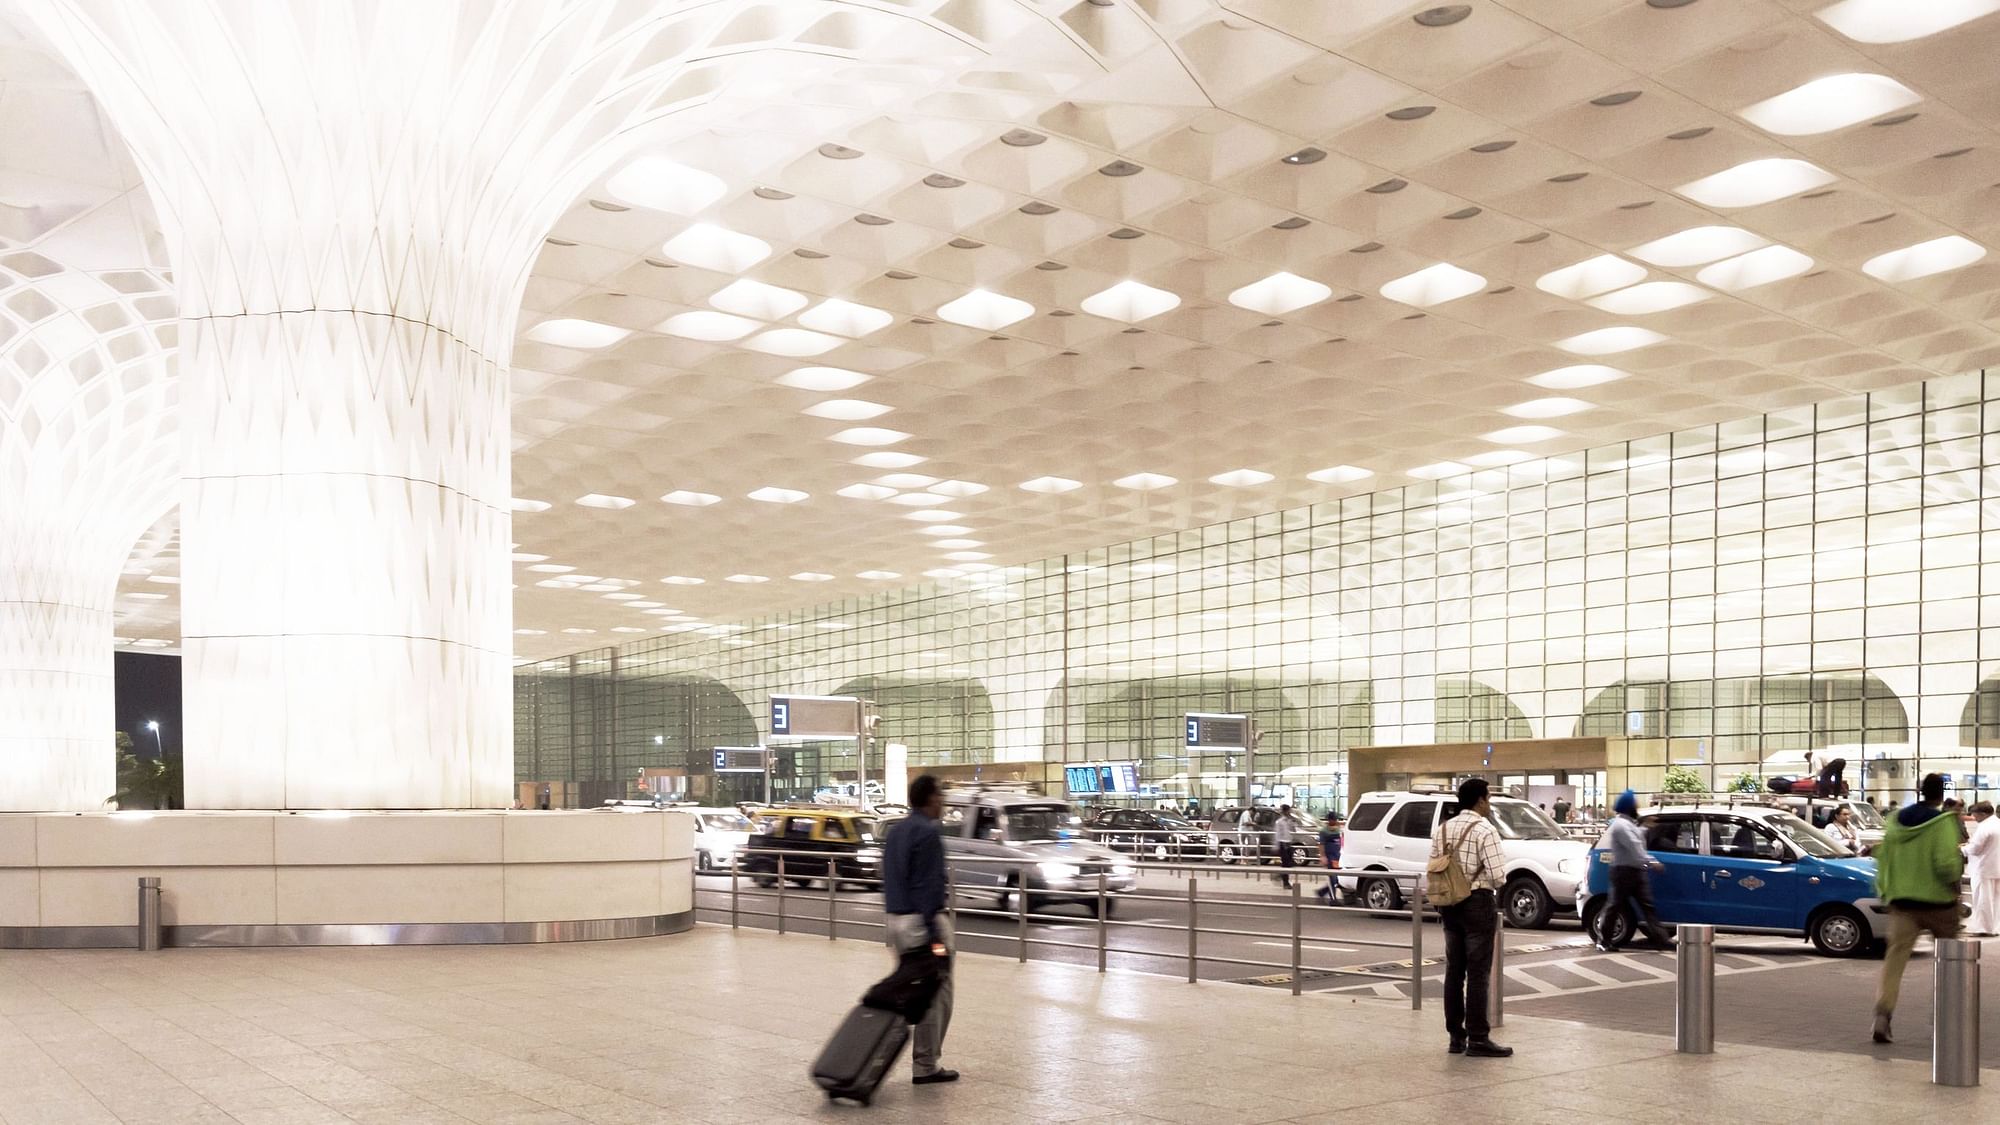 Image of Mumbai’s Chhatrapati Shivaji International Airport used for representation purpose.